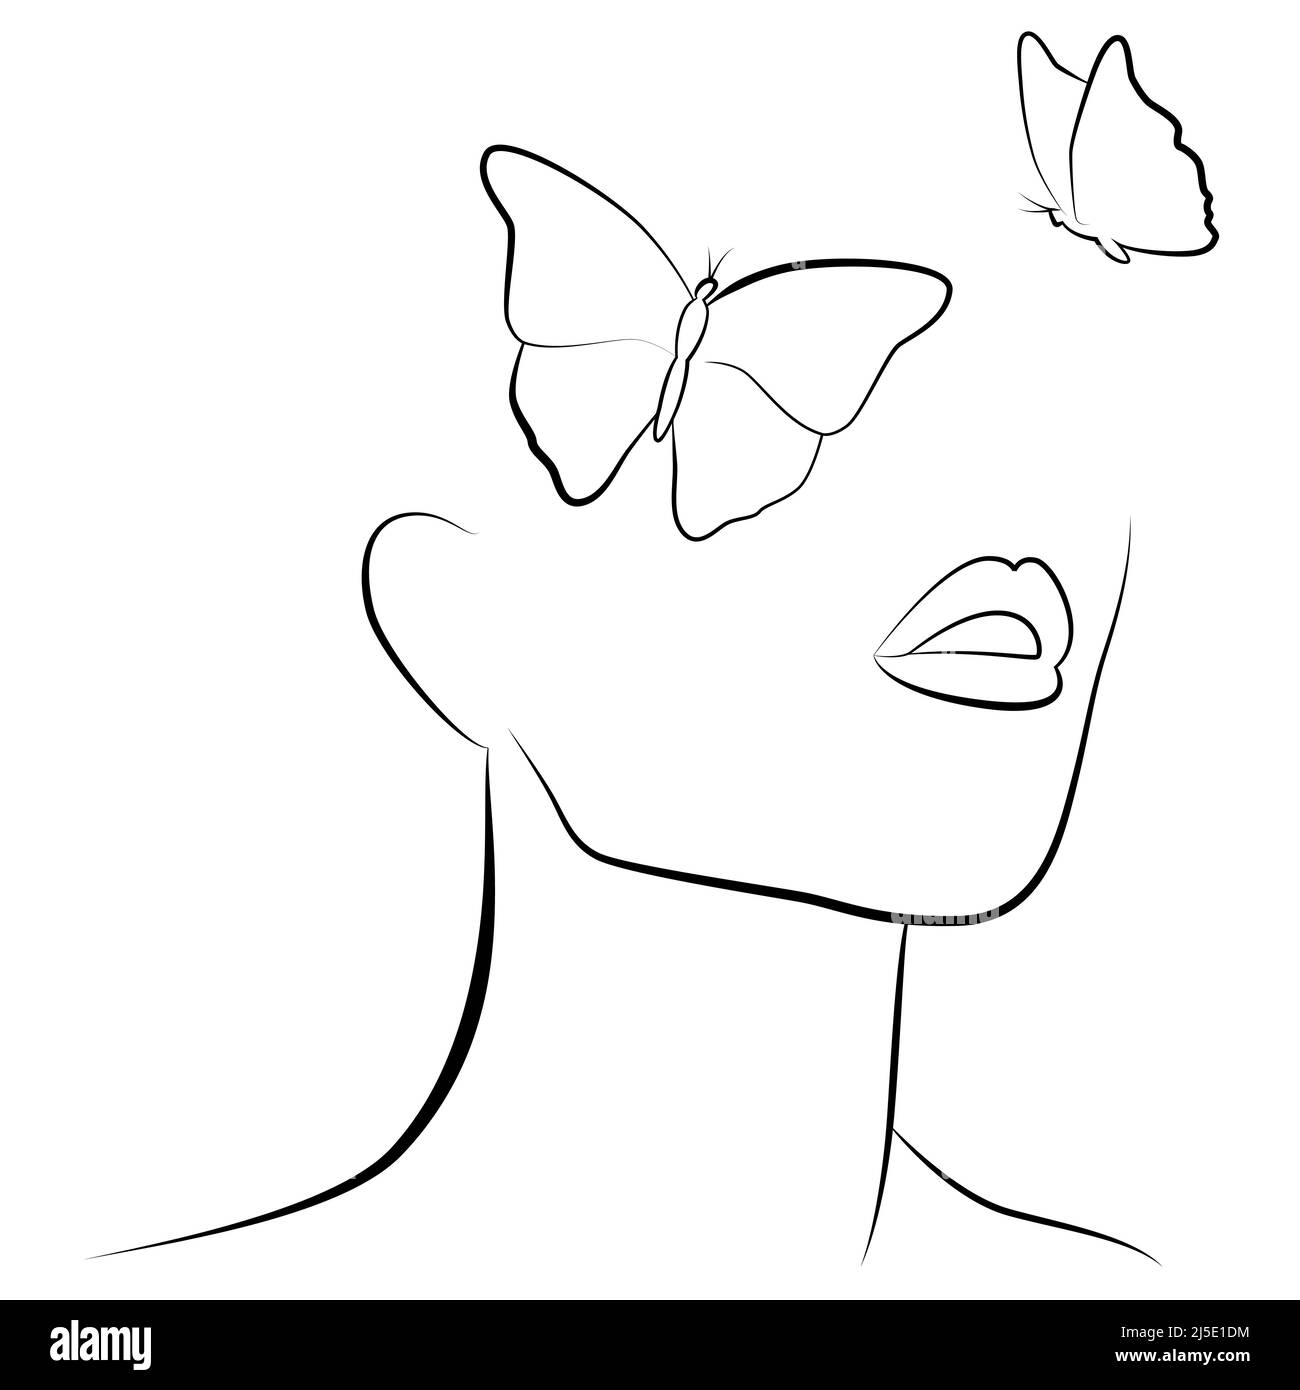 Dibujo linea continua cara mujer Imágenes recortadas de stock - Página 3 -  Alamy